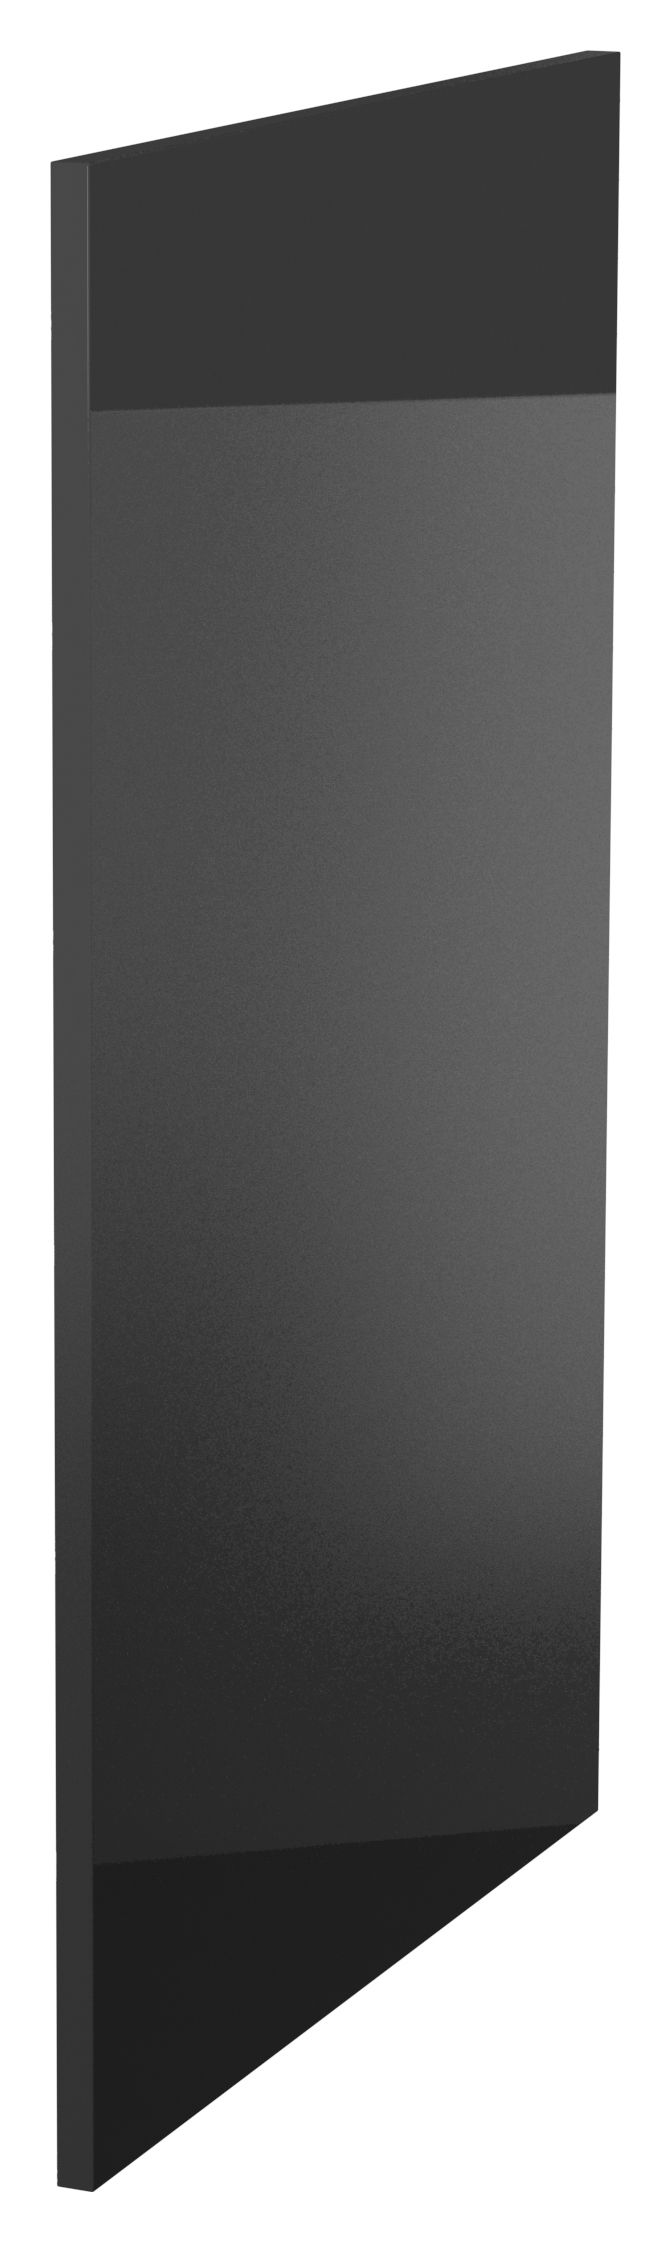 Image of Orlando/Madison Dark Grey Gloss Decorative Base Panel - 18mm